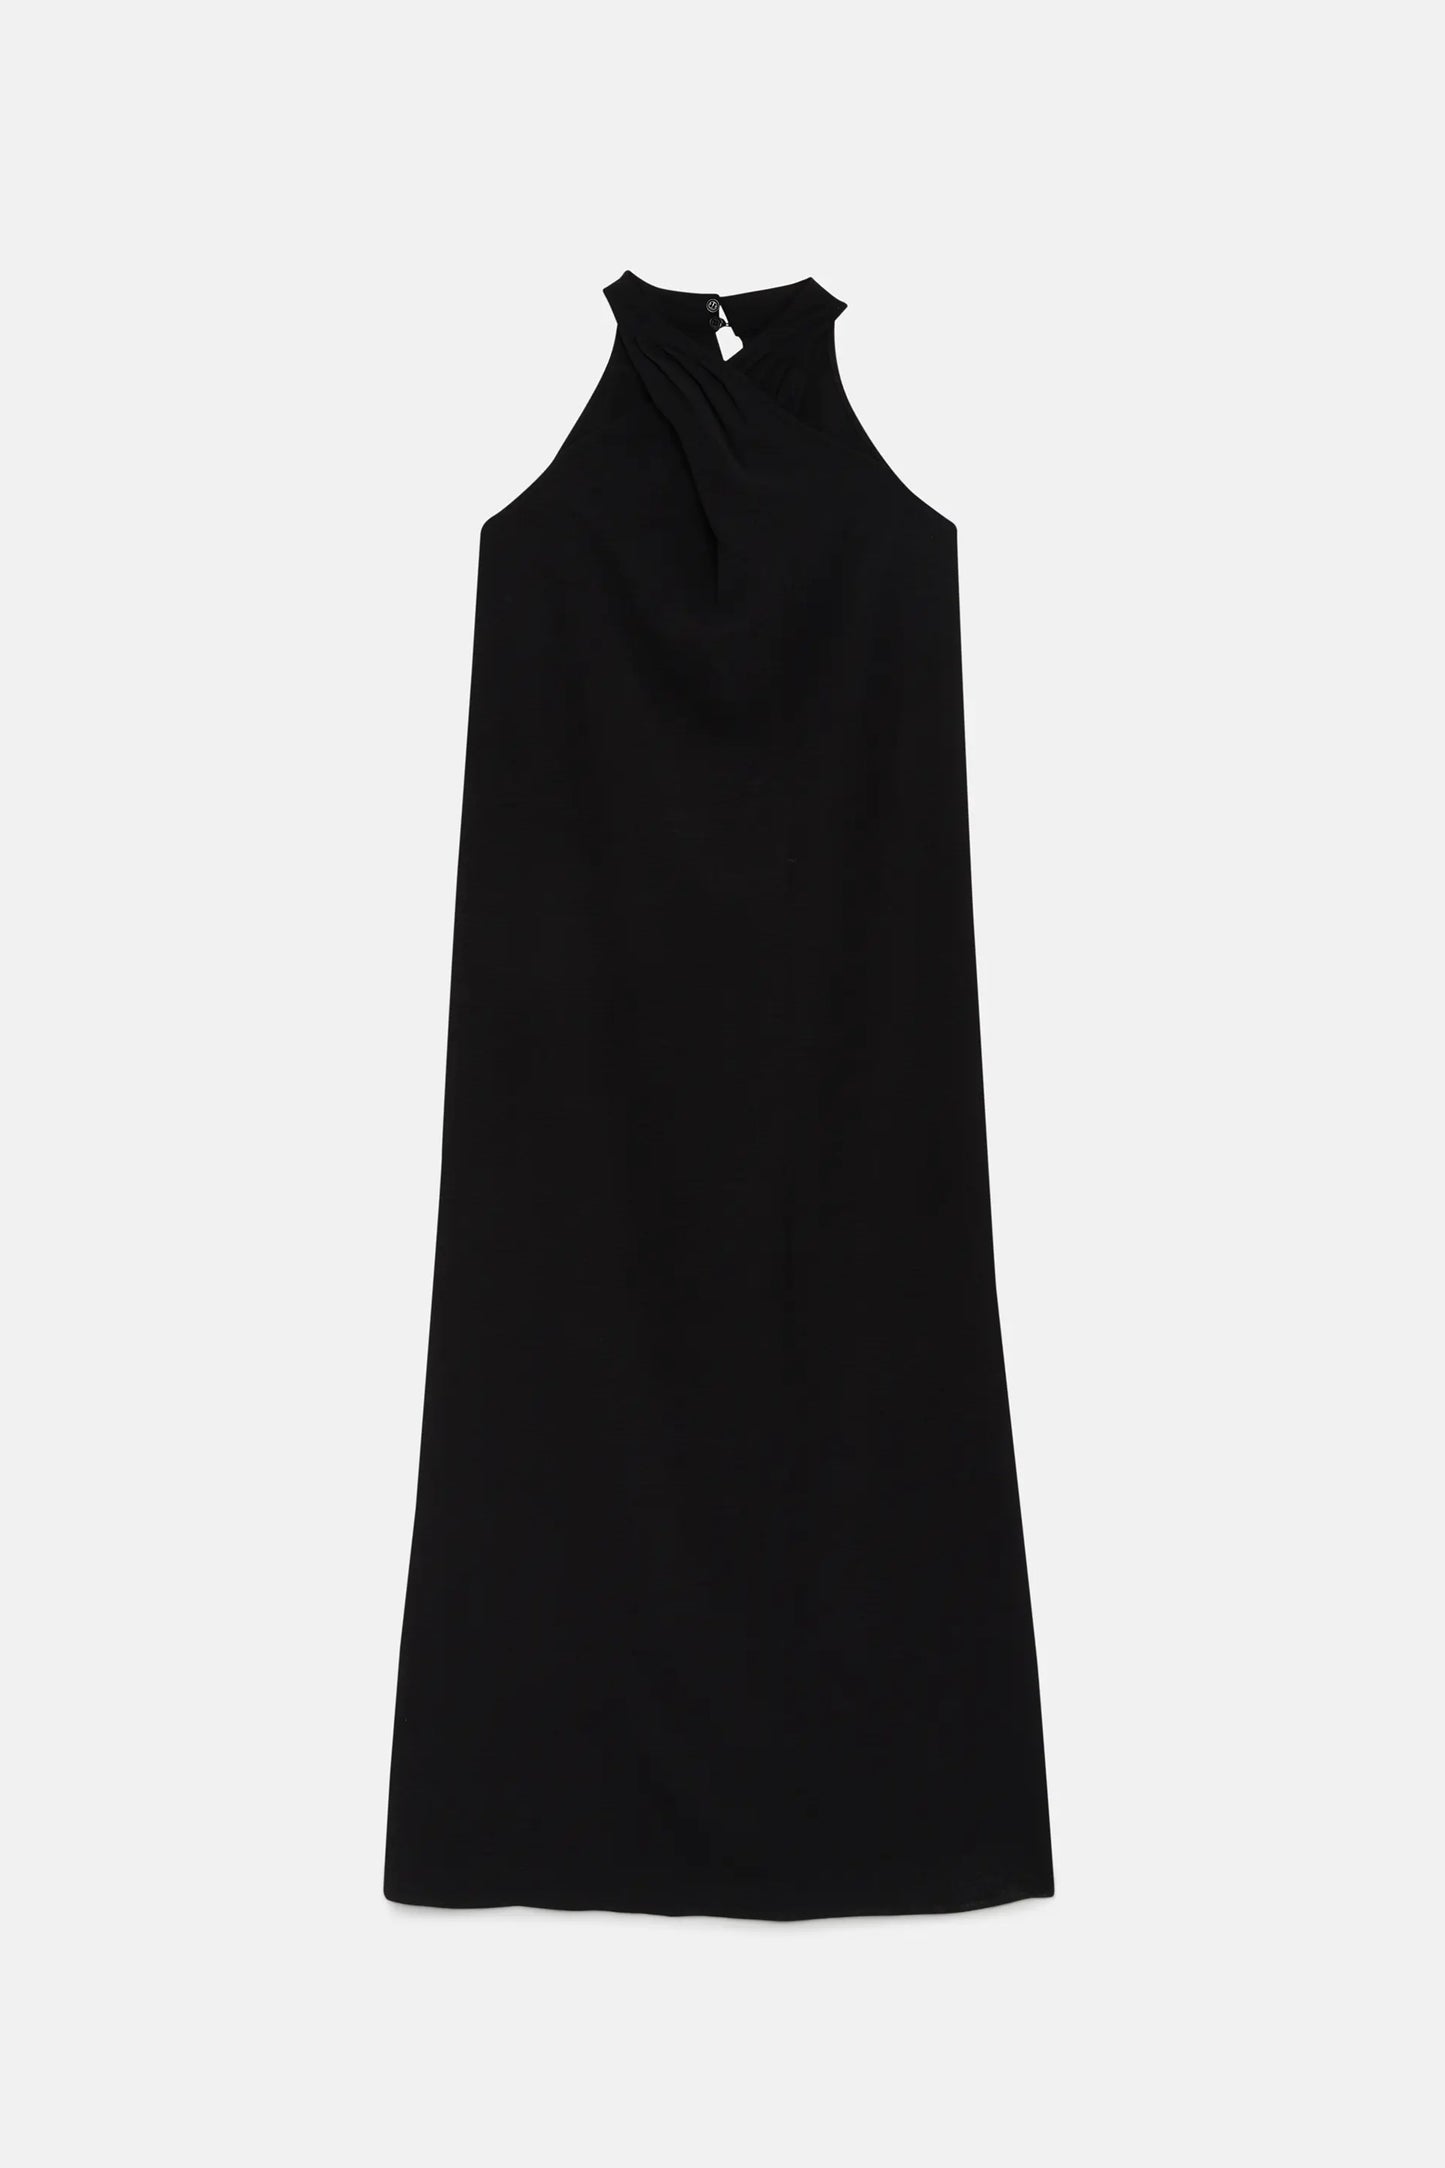 Long black halter neck dress